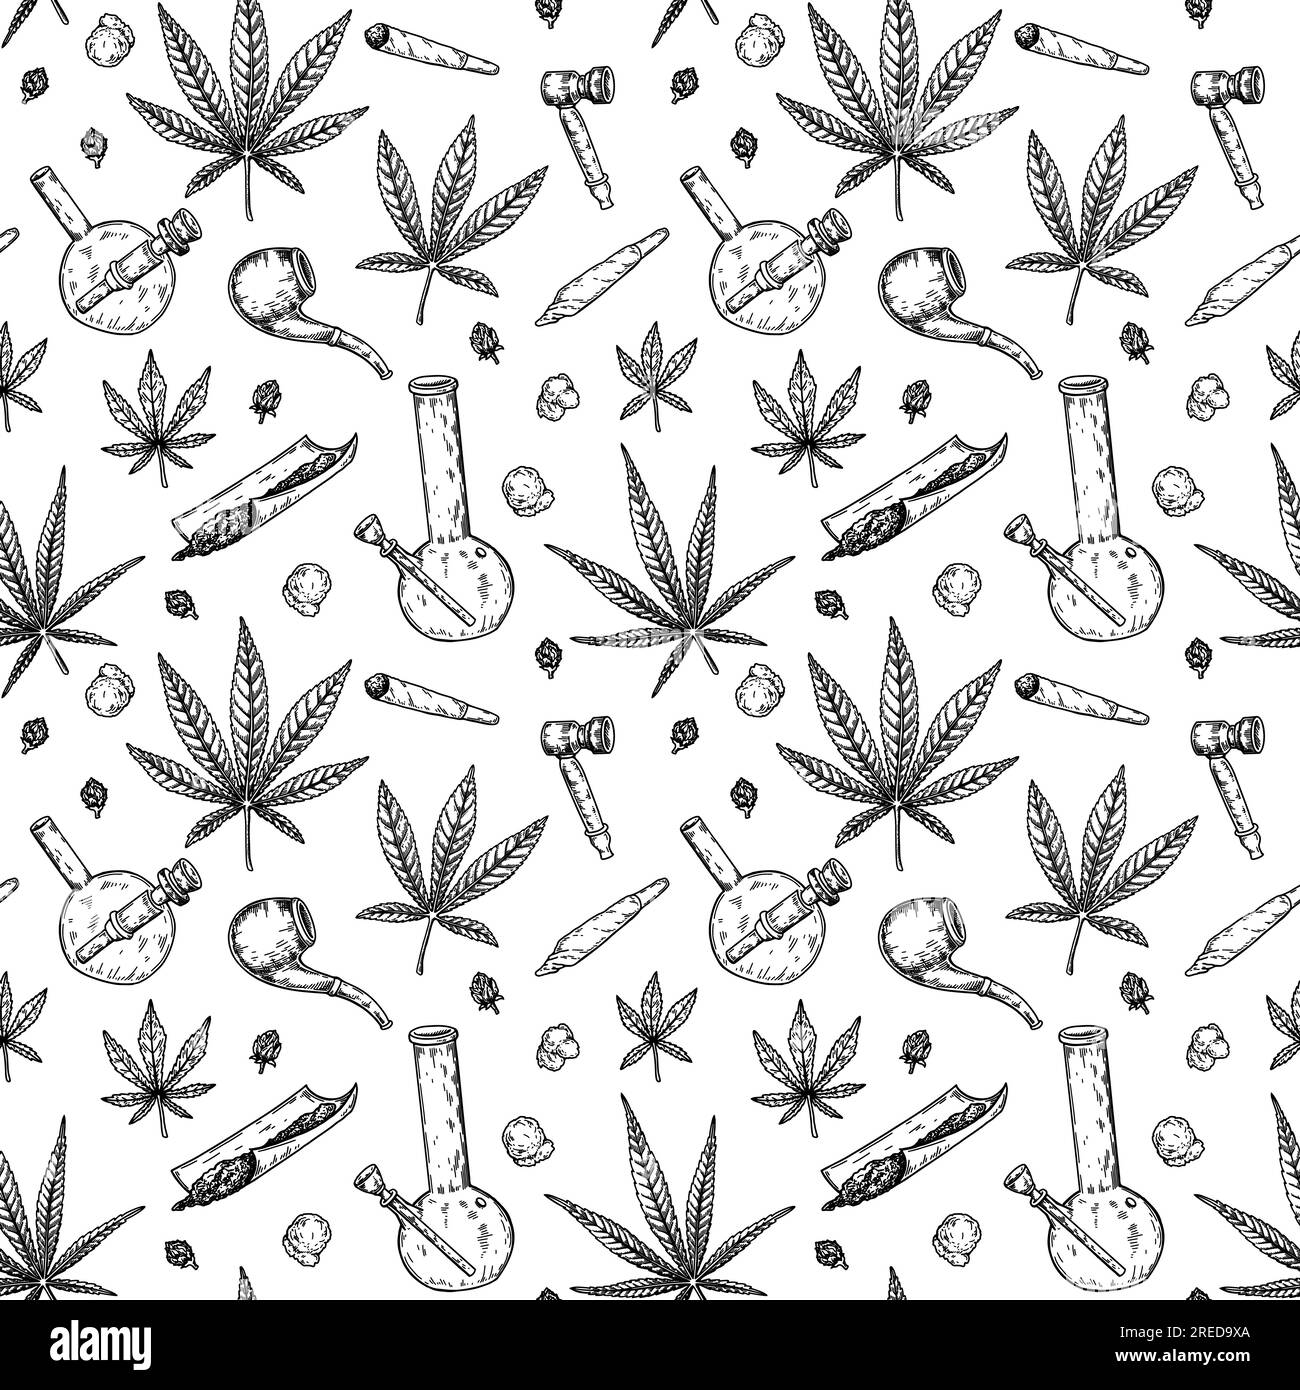 Marijuana Fabric Wallpaper and Home Decor  Spoonflower